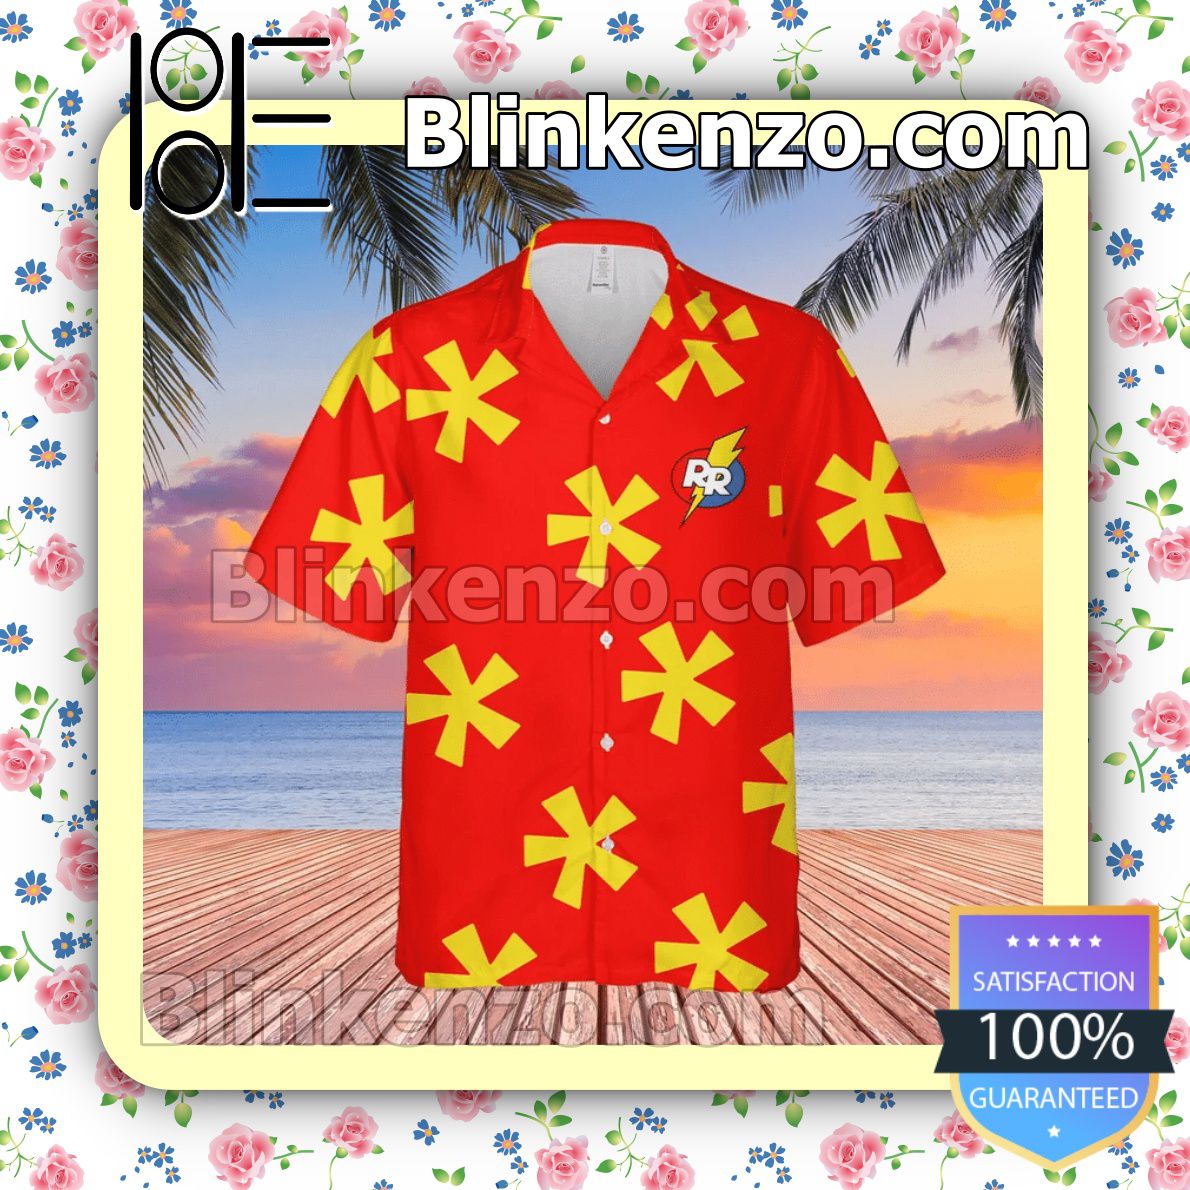 Chip 'n Dale Rescue Rangers Disney Summer Hawaiian Shirt, Mens Shorts